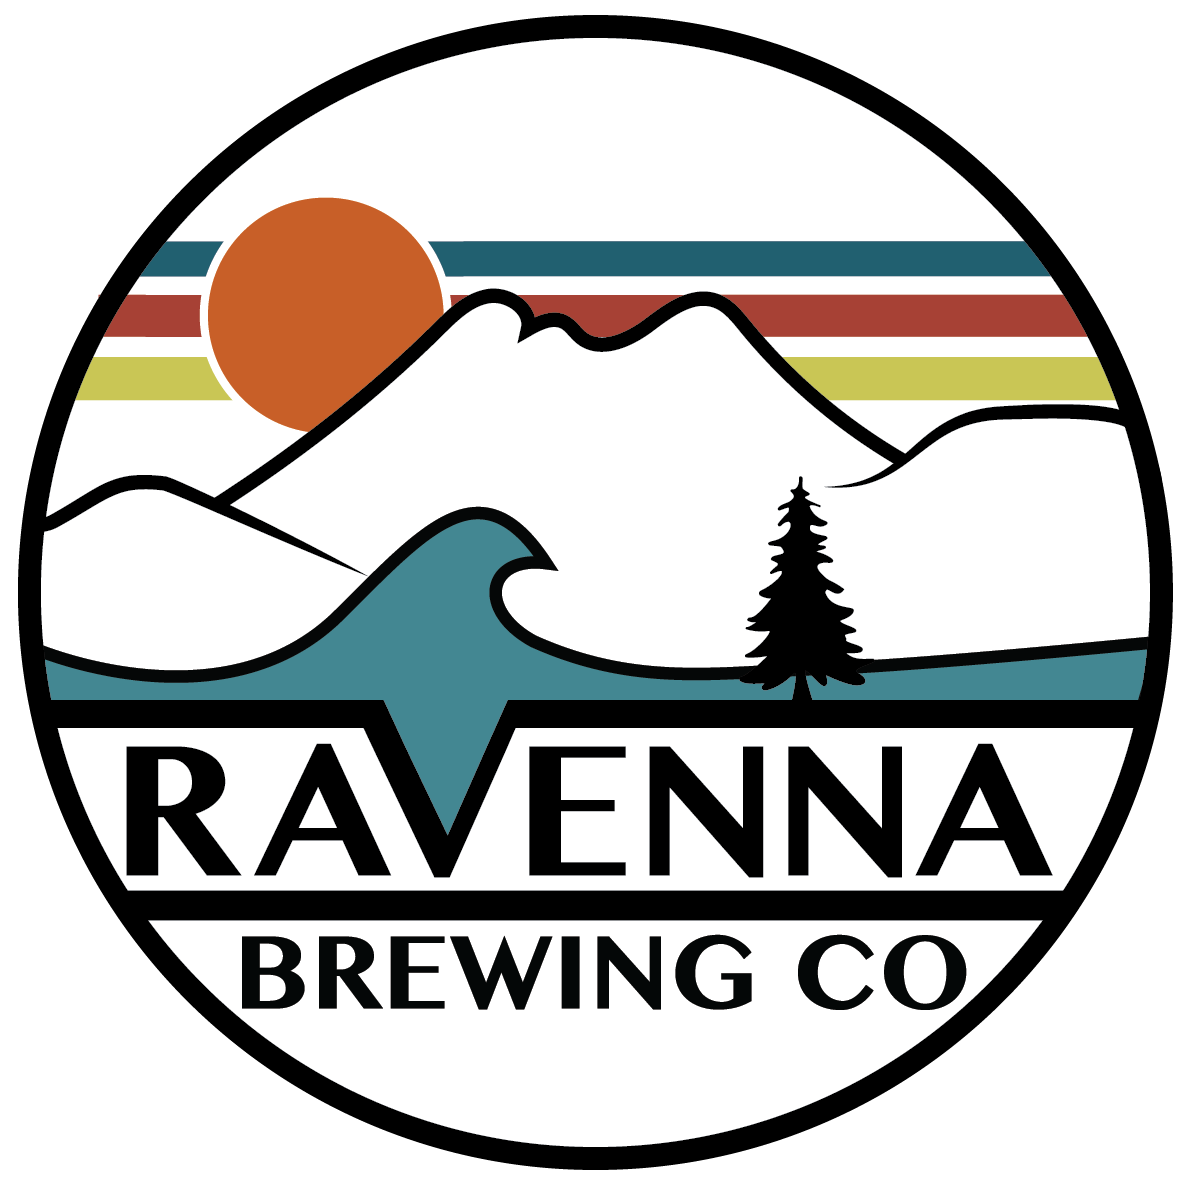 Company logo of Ravenna Brewing Co